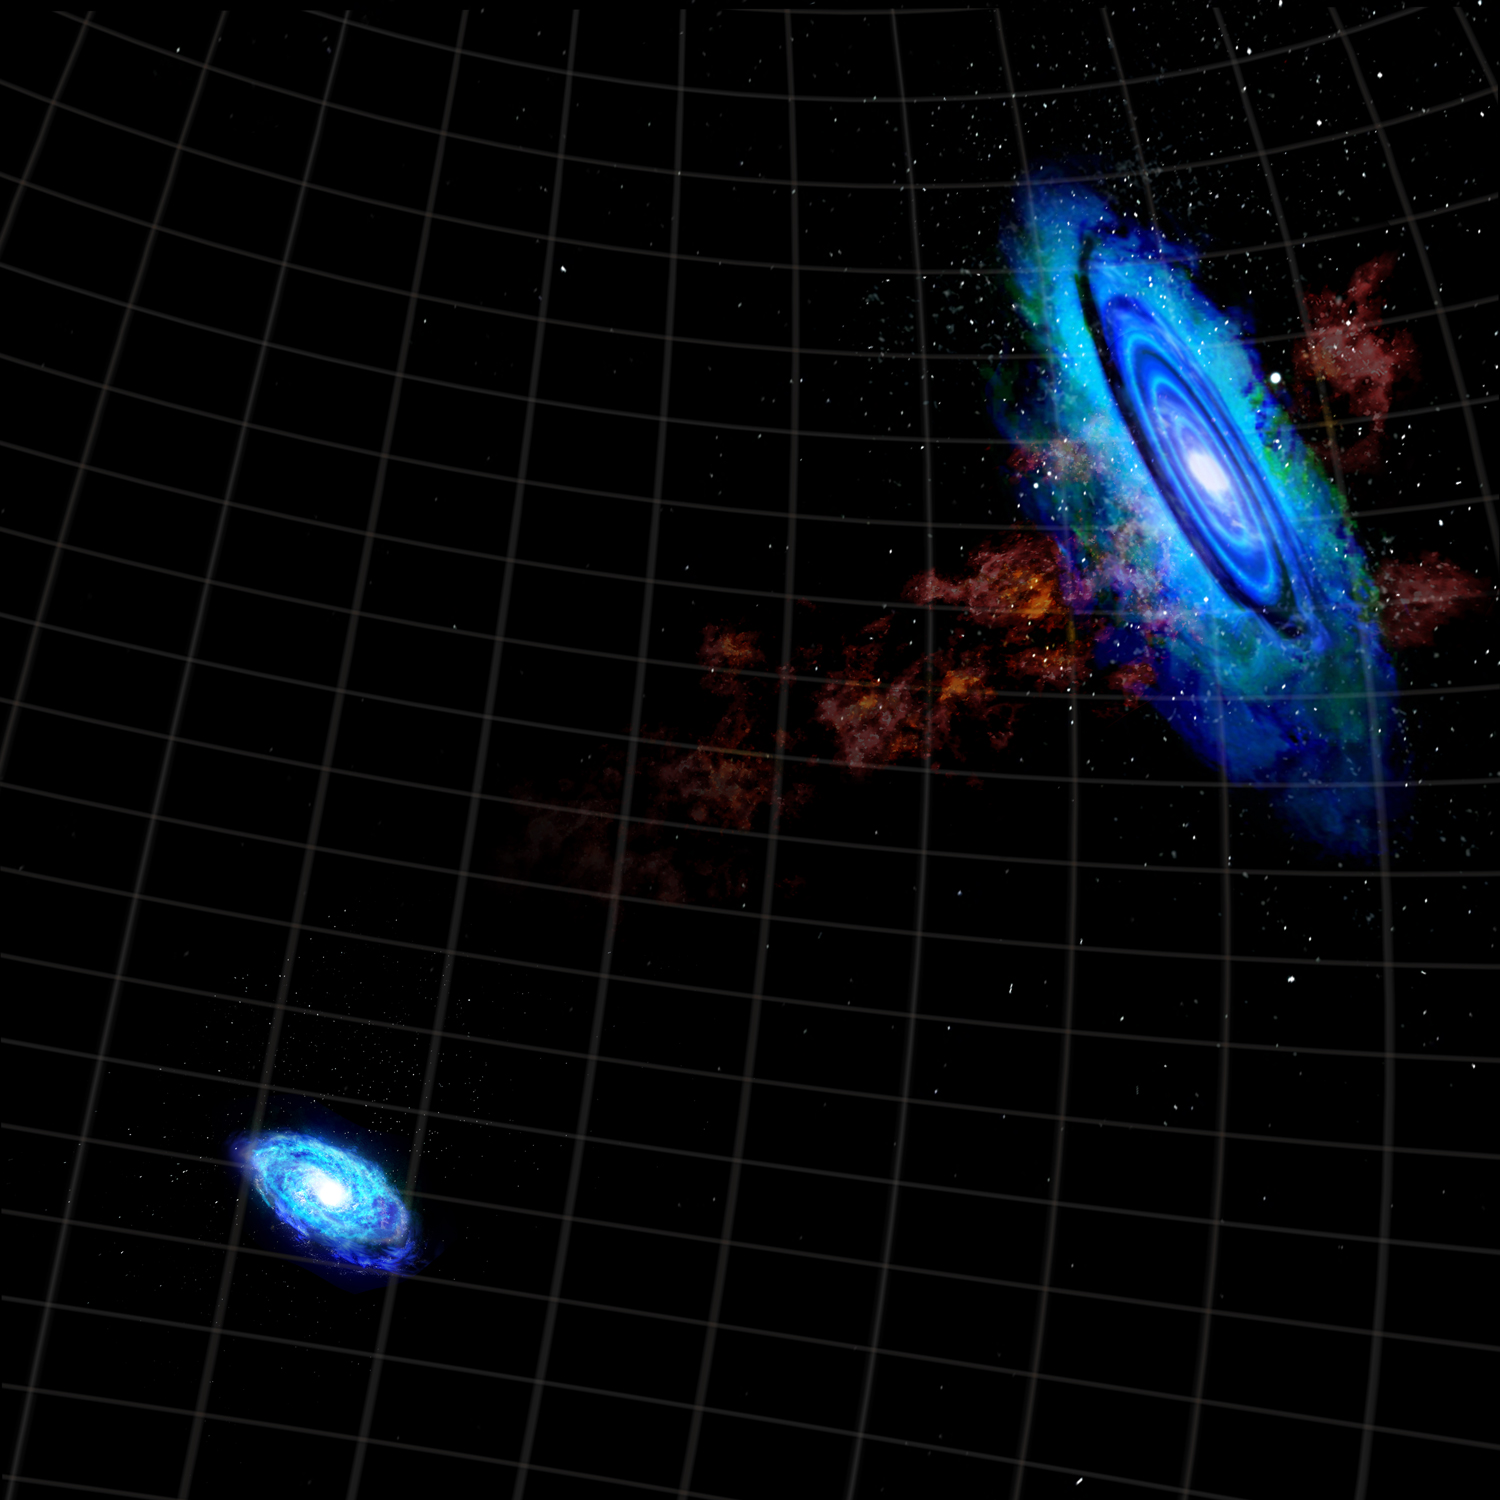 2 bright blue galaxies and irregular reddish clouds between them.